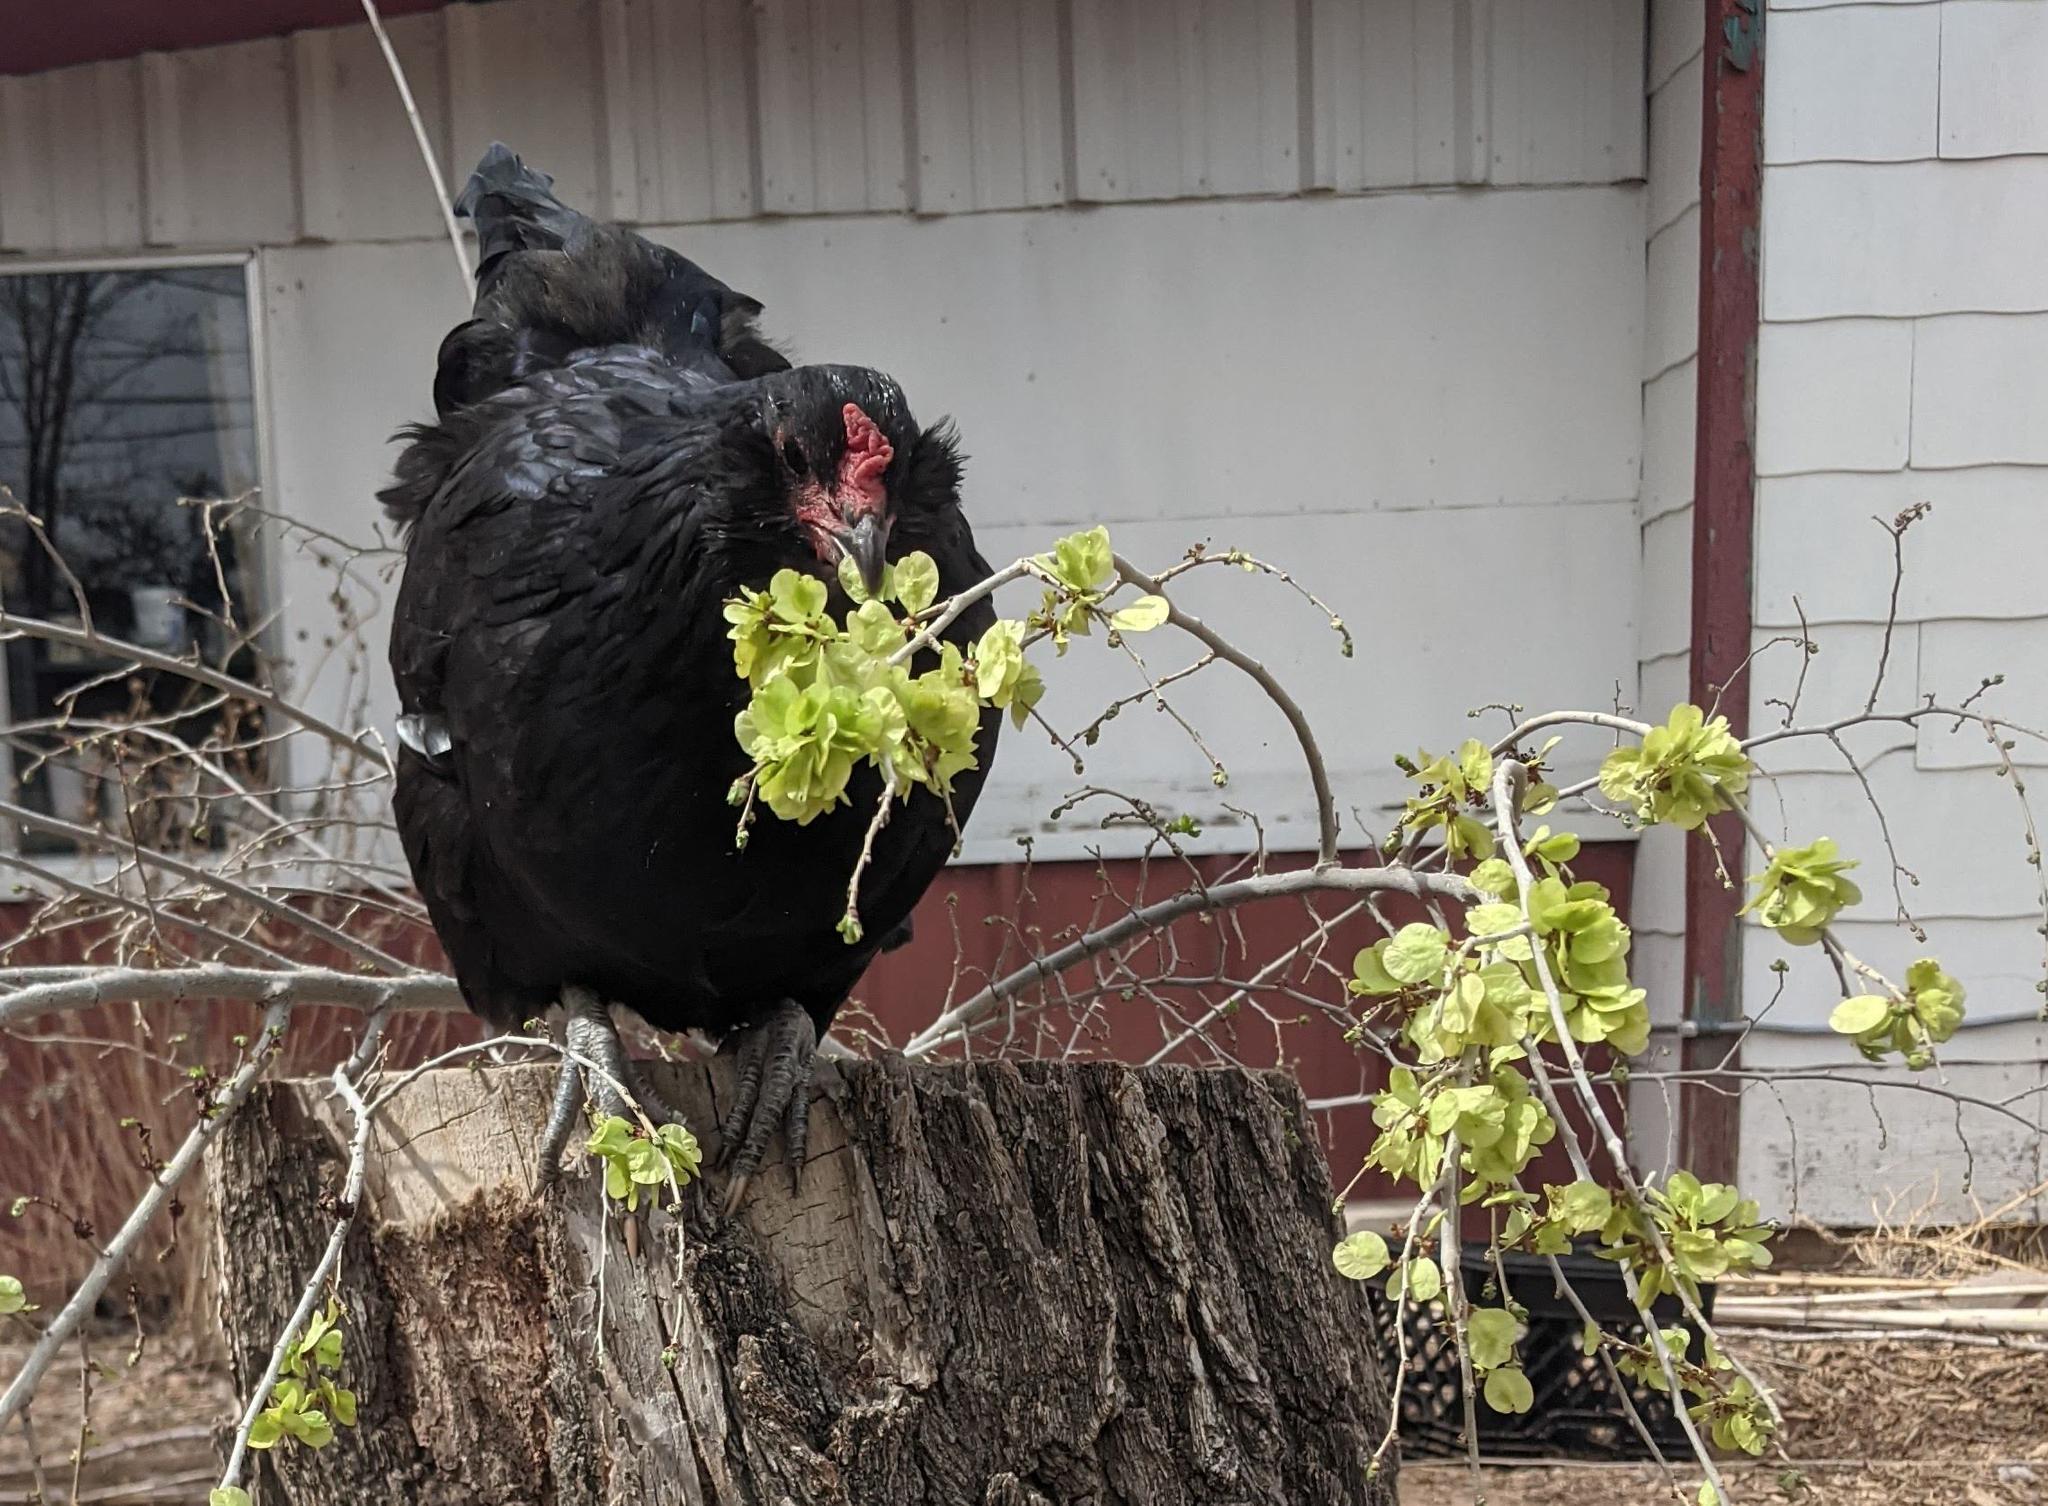 A chicken eating elm seeds.